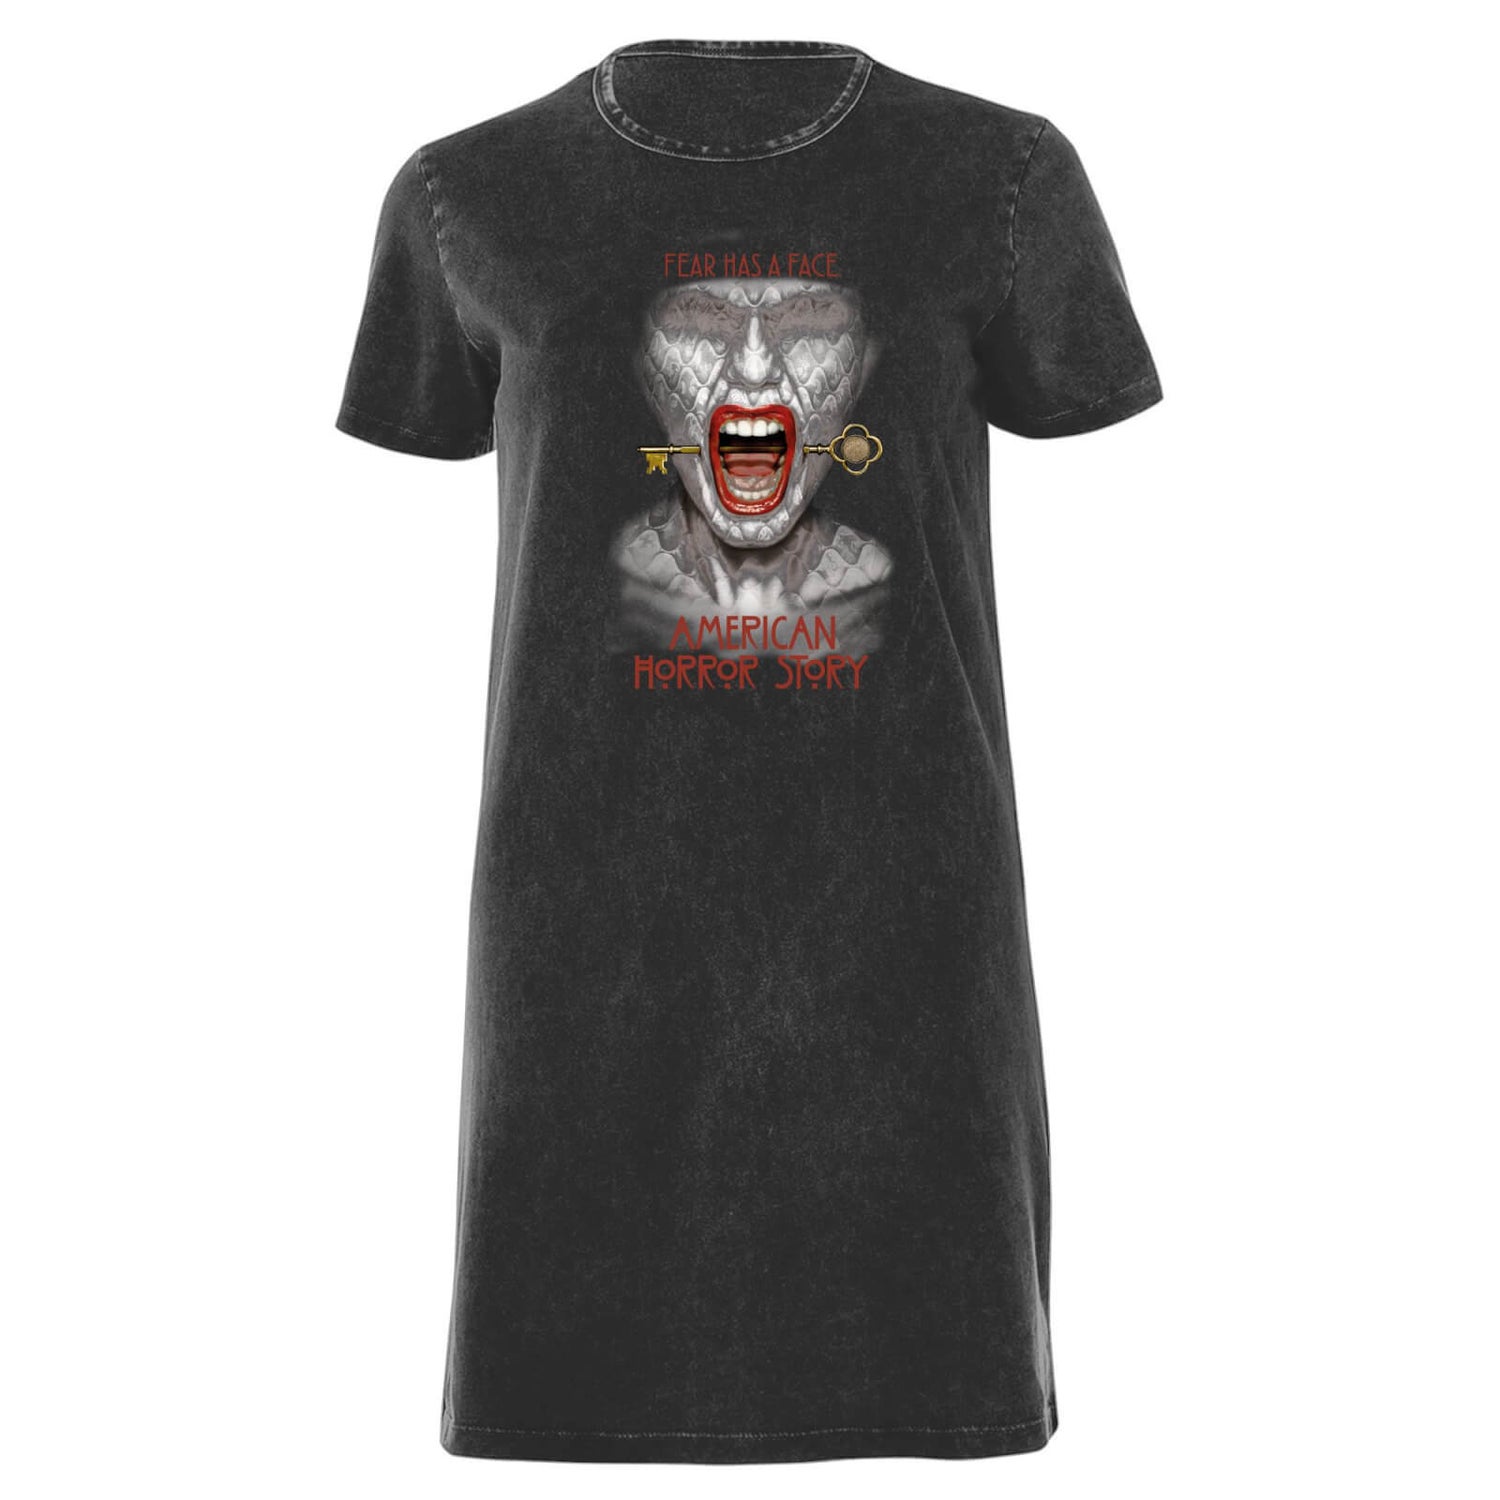 American Horror Story Fear Has A Face Women's T-Shirt Dress - Black Acid Wash